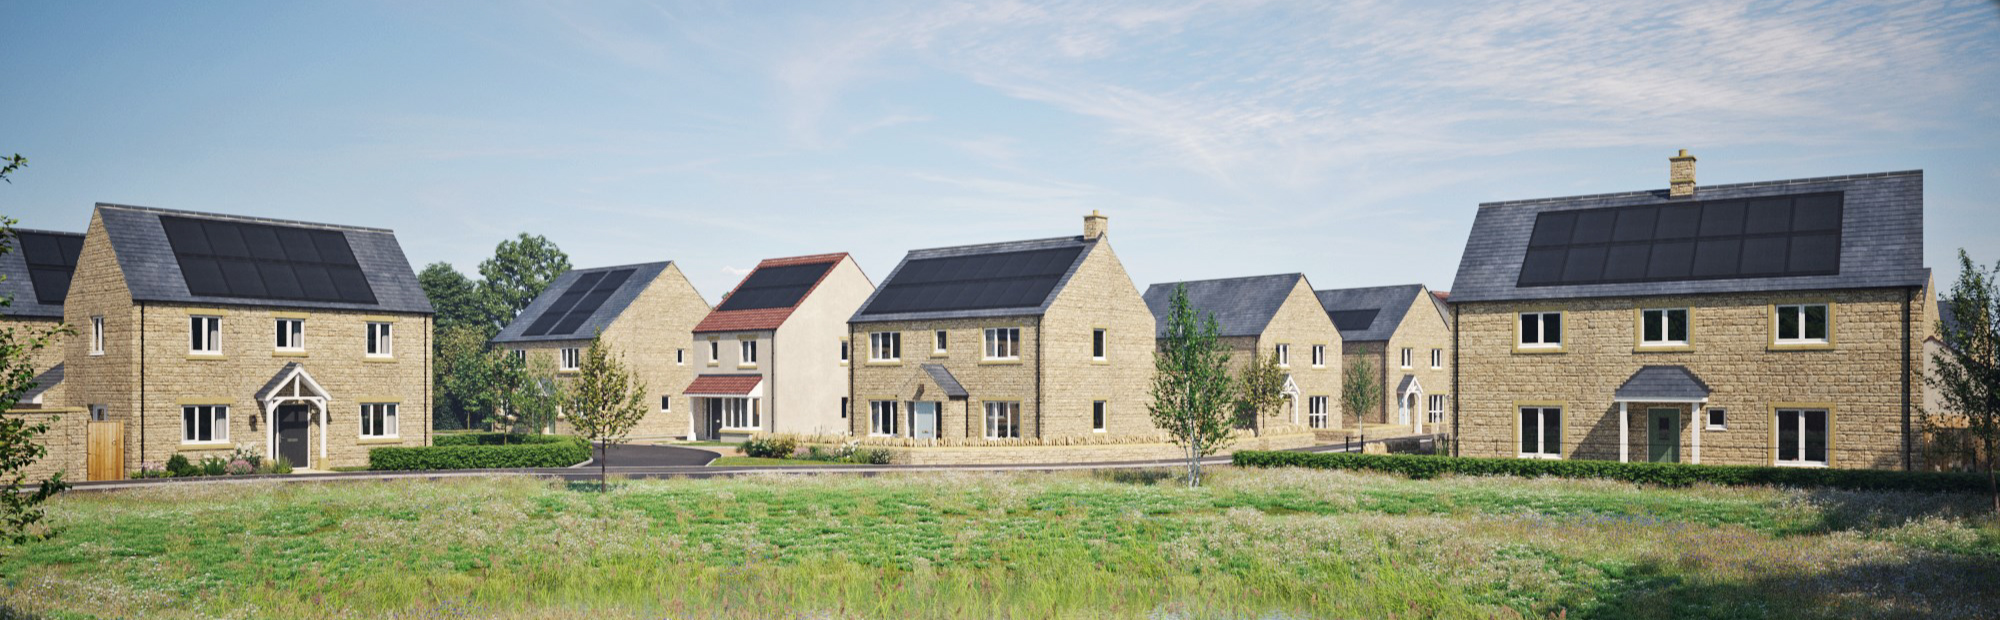 New homes in Malmesbury